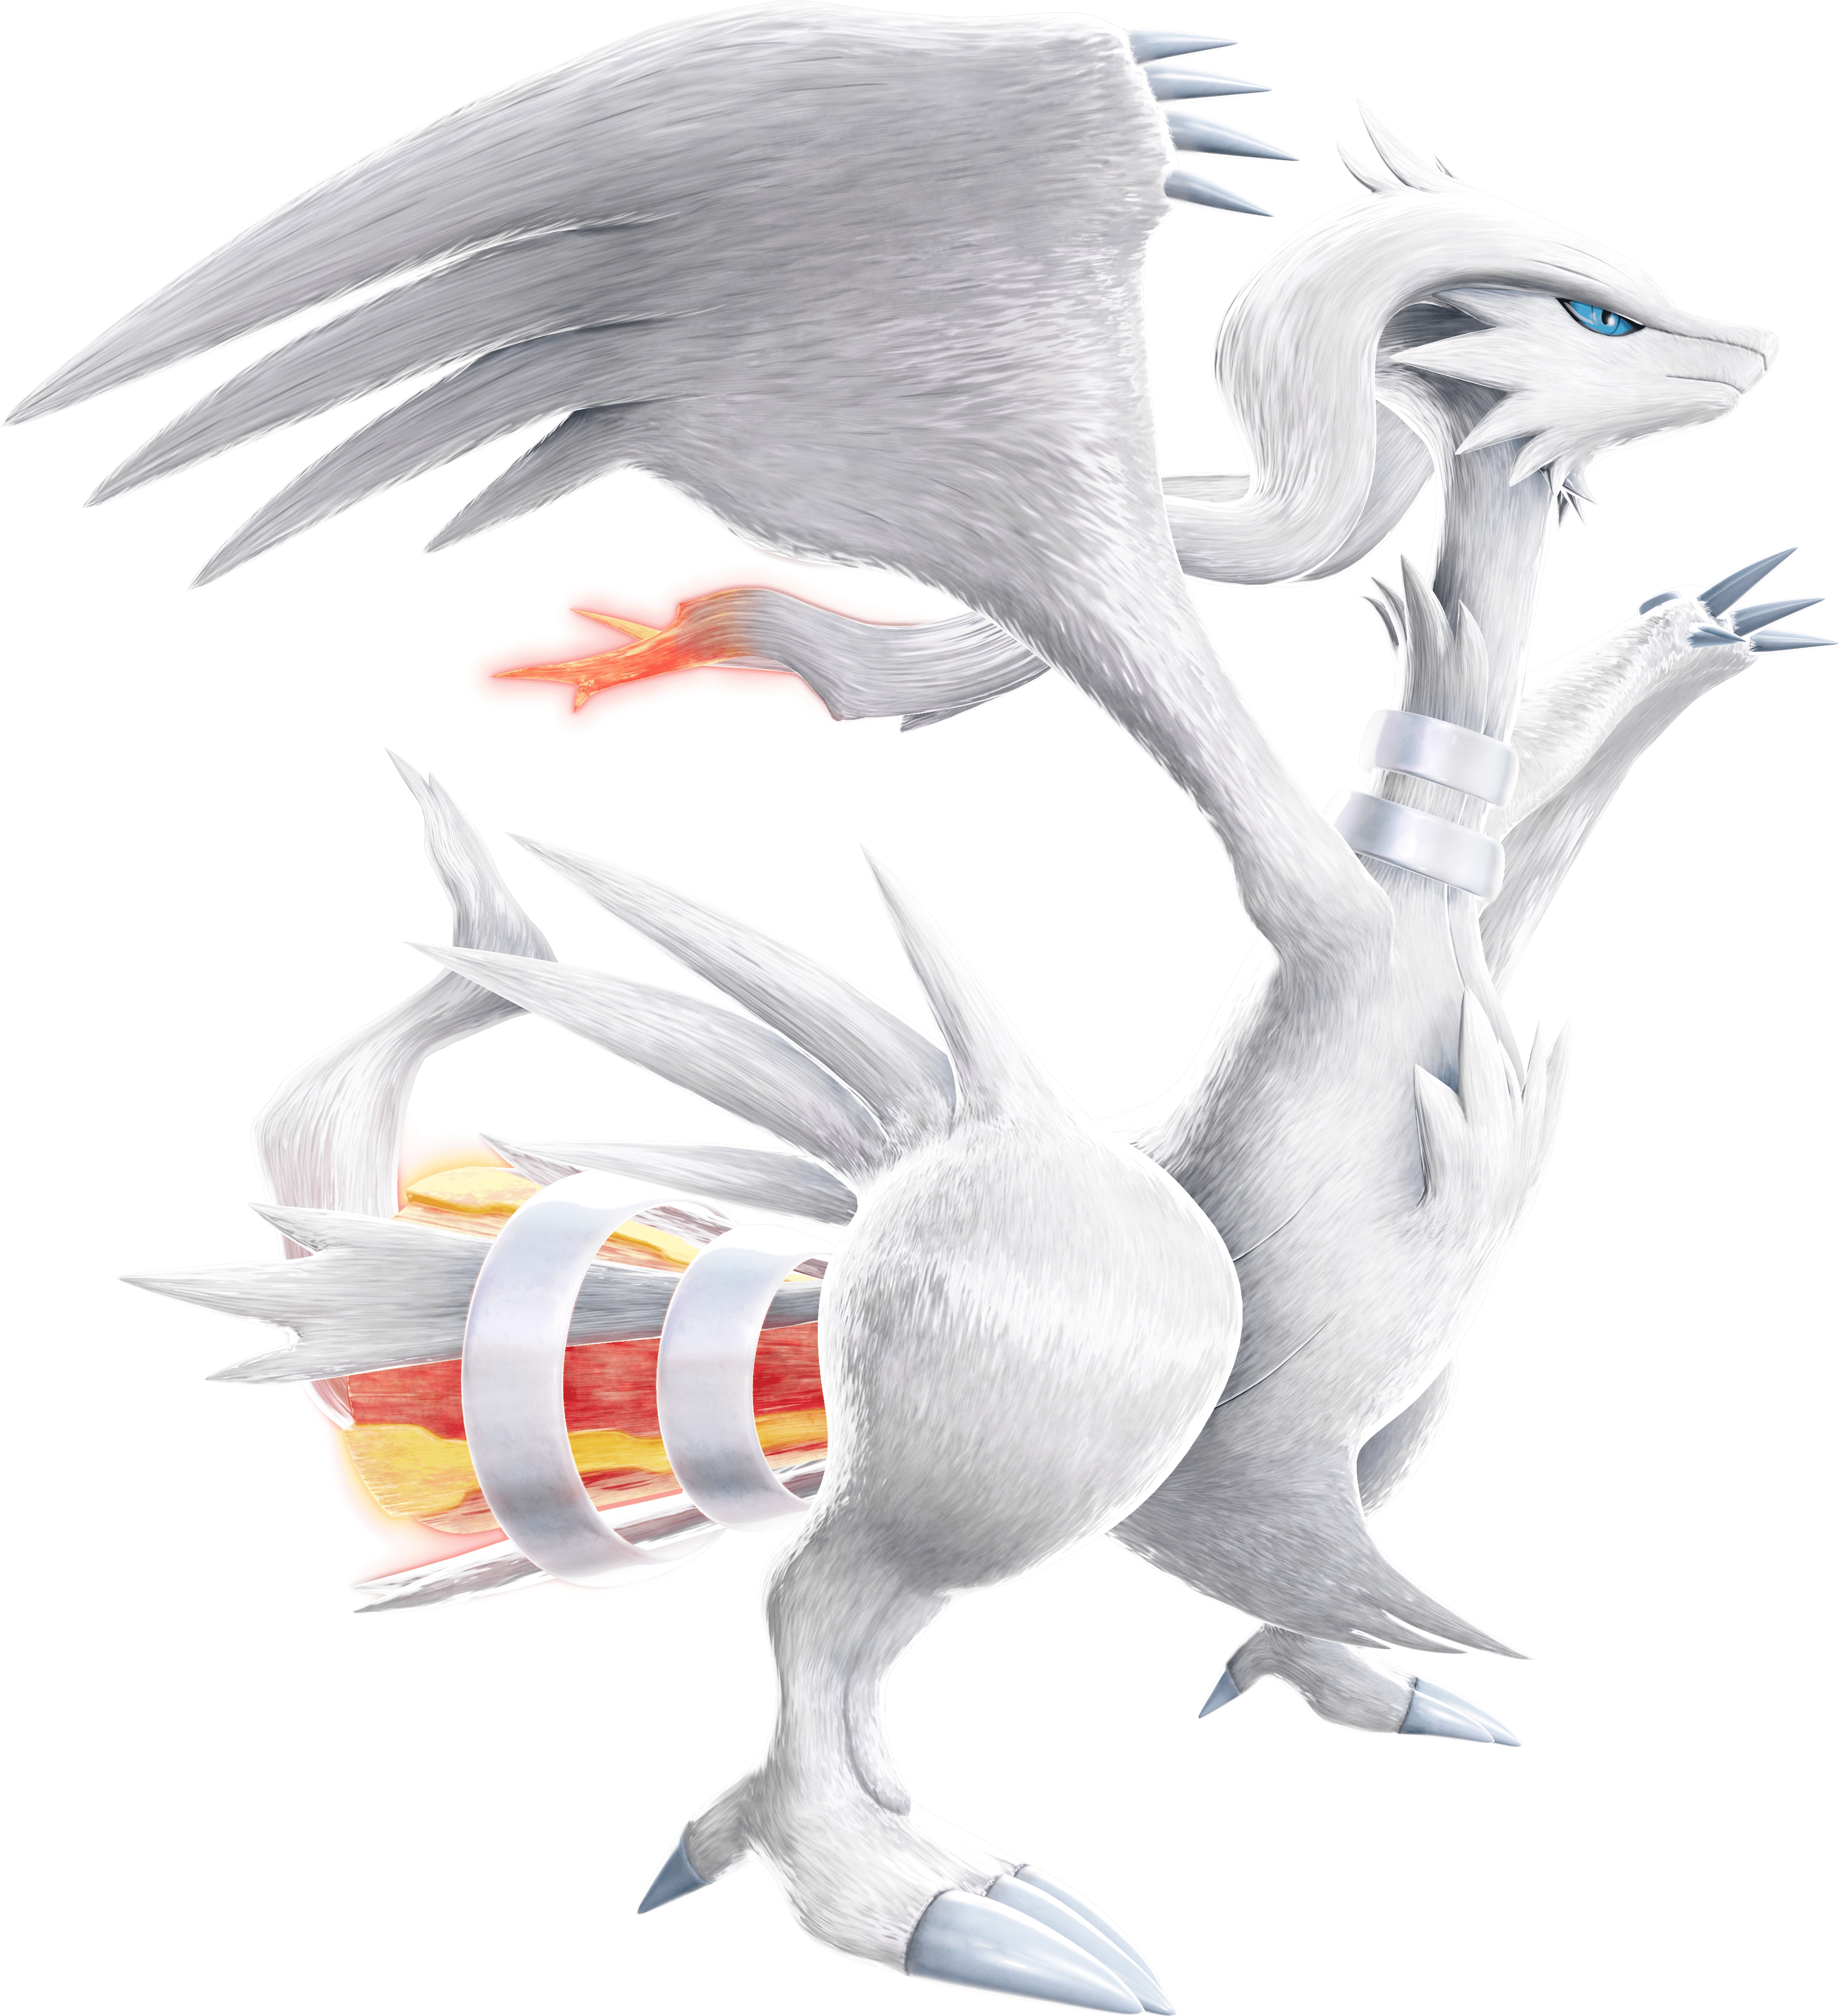 Reshiram (M14) - Bulbapedia, the community-driven Pokémon encyclopedia